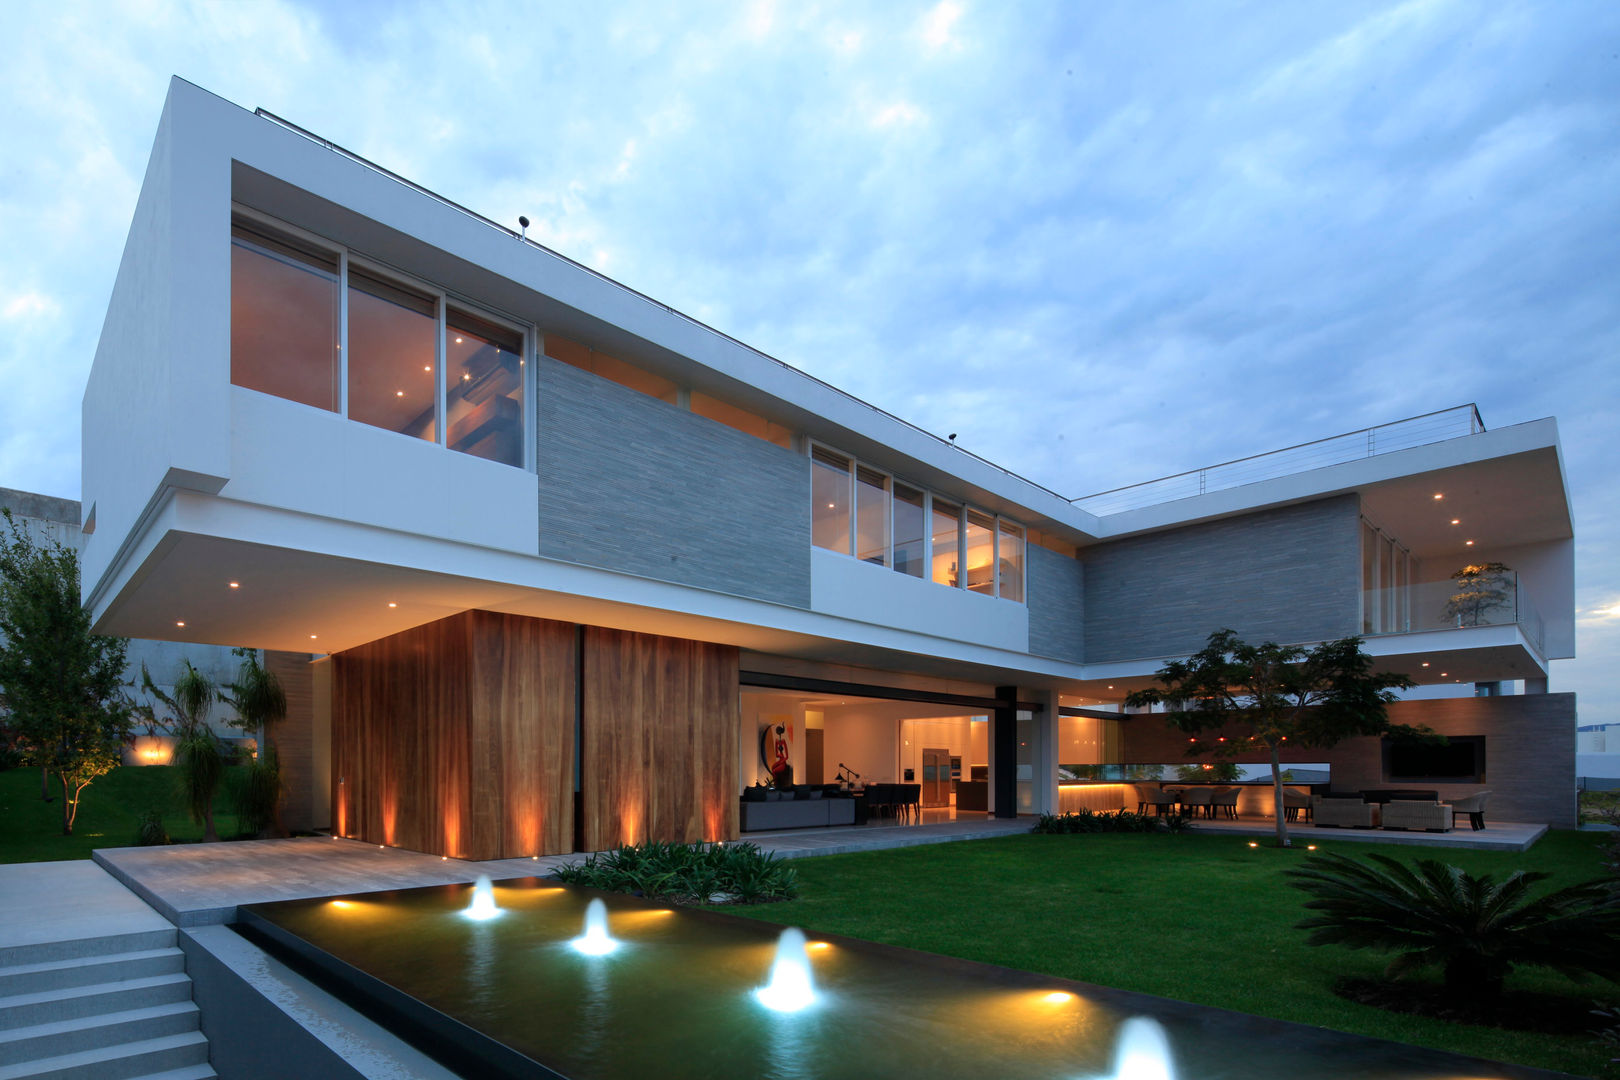 BR HOUSE, Hernandez Silva Arquitectos Hernandez Silva Arquitectos Casas estilo moderno: ideas, arquitectura e imágenes